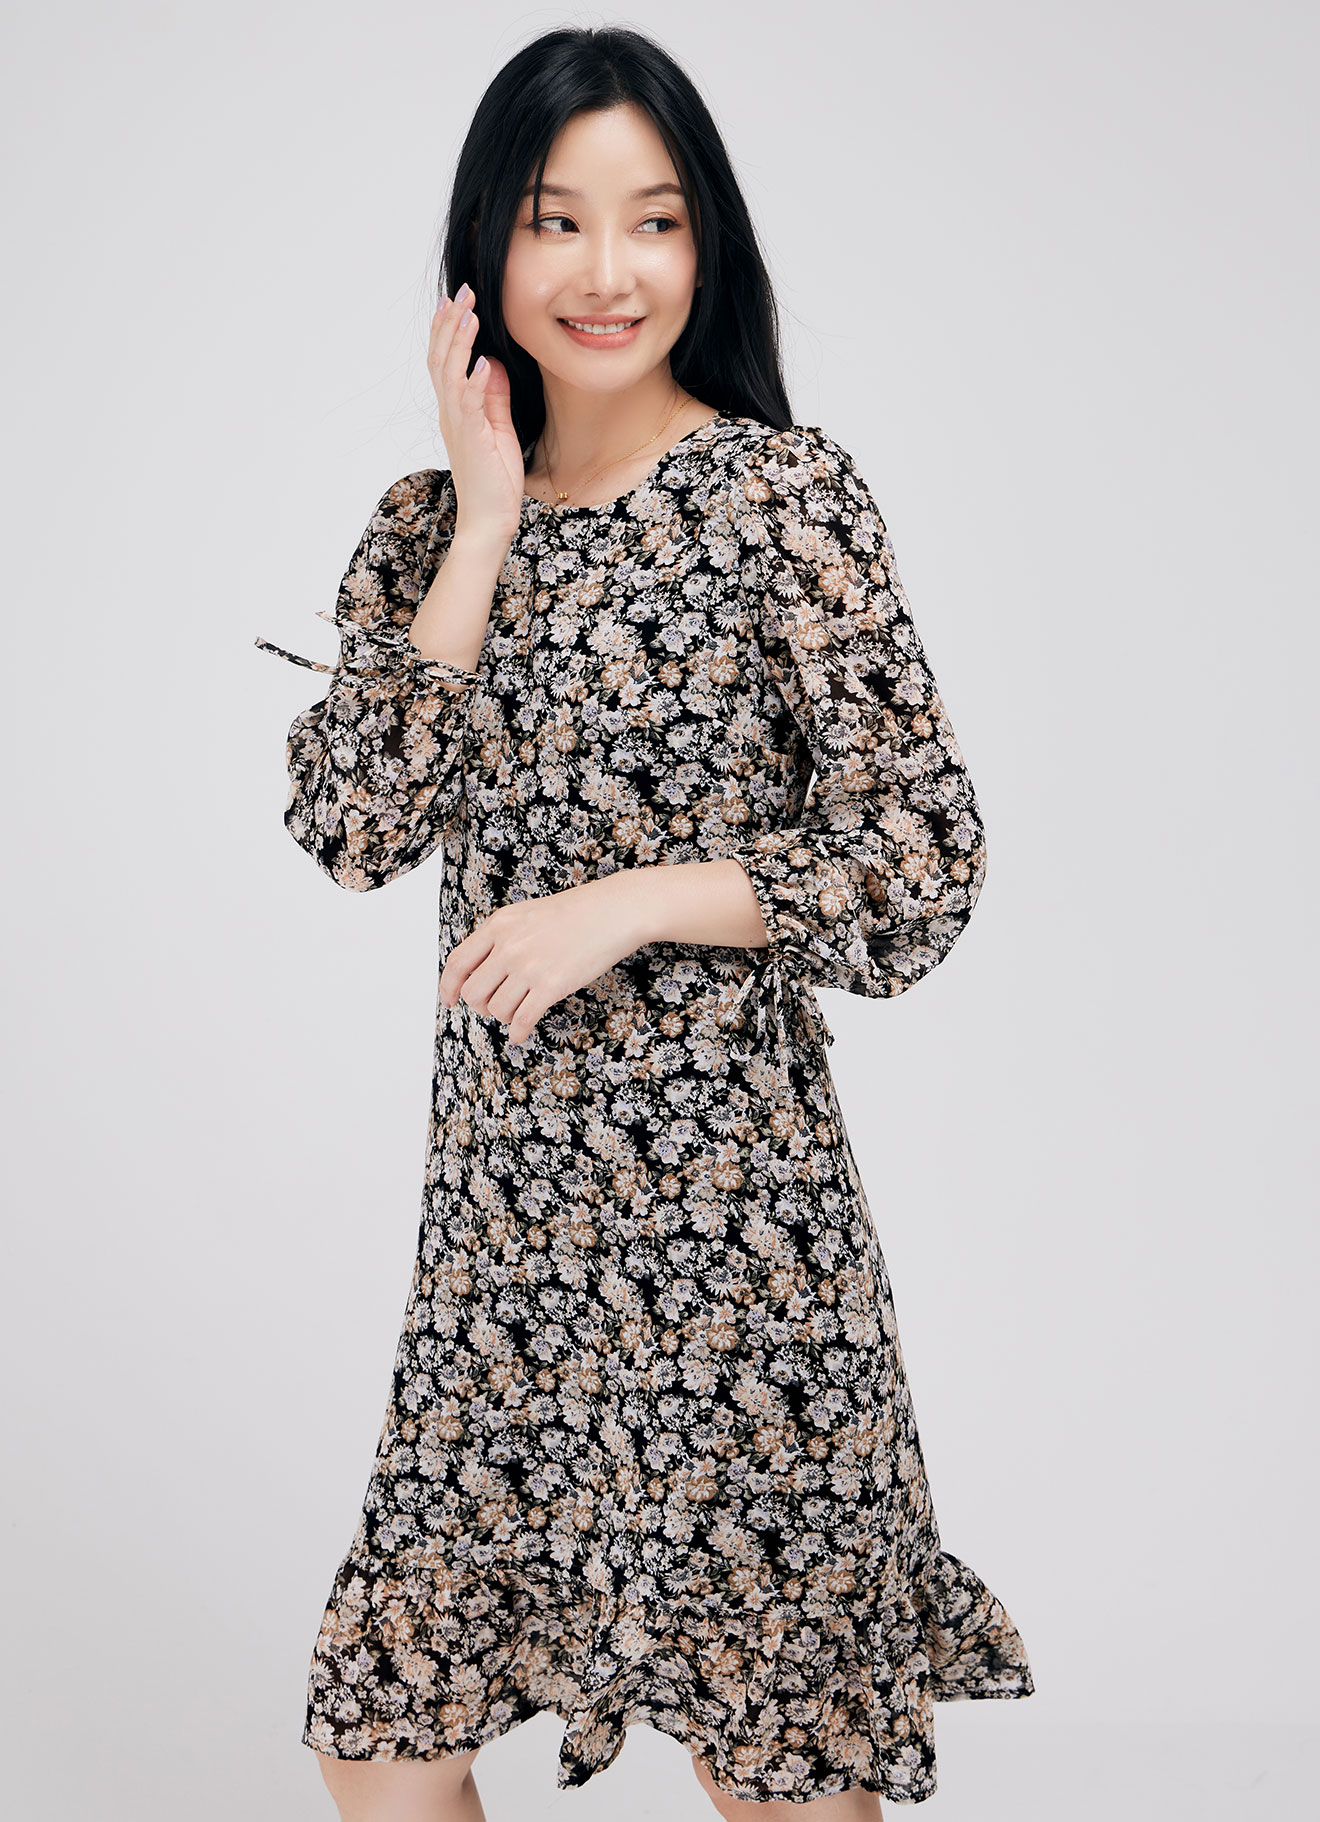 Tan by Floral Printed Dress